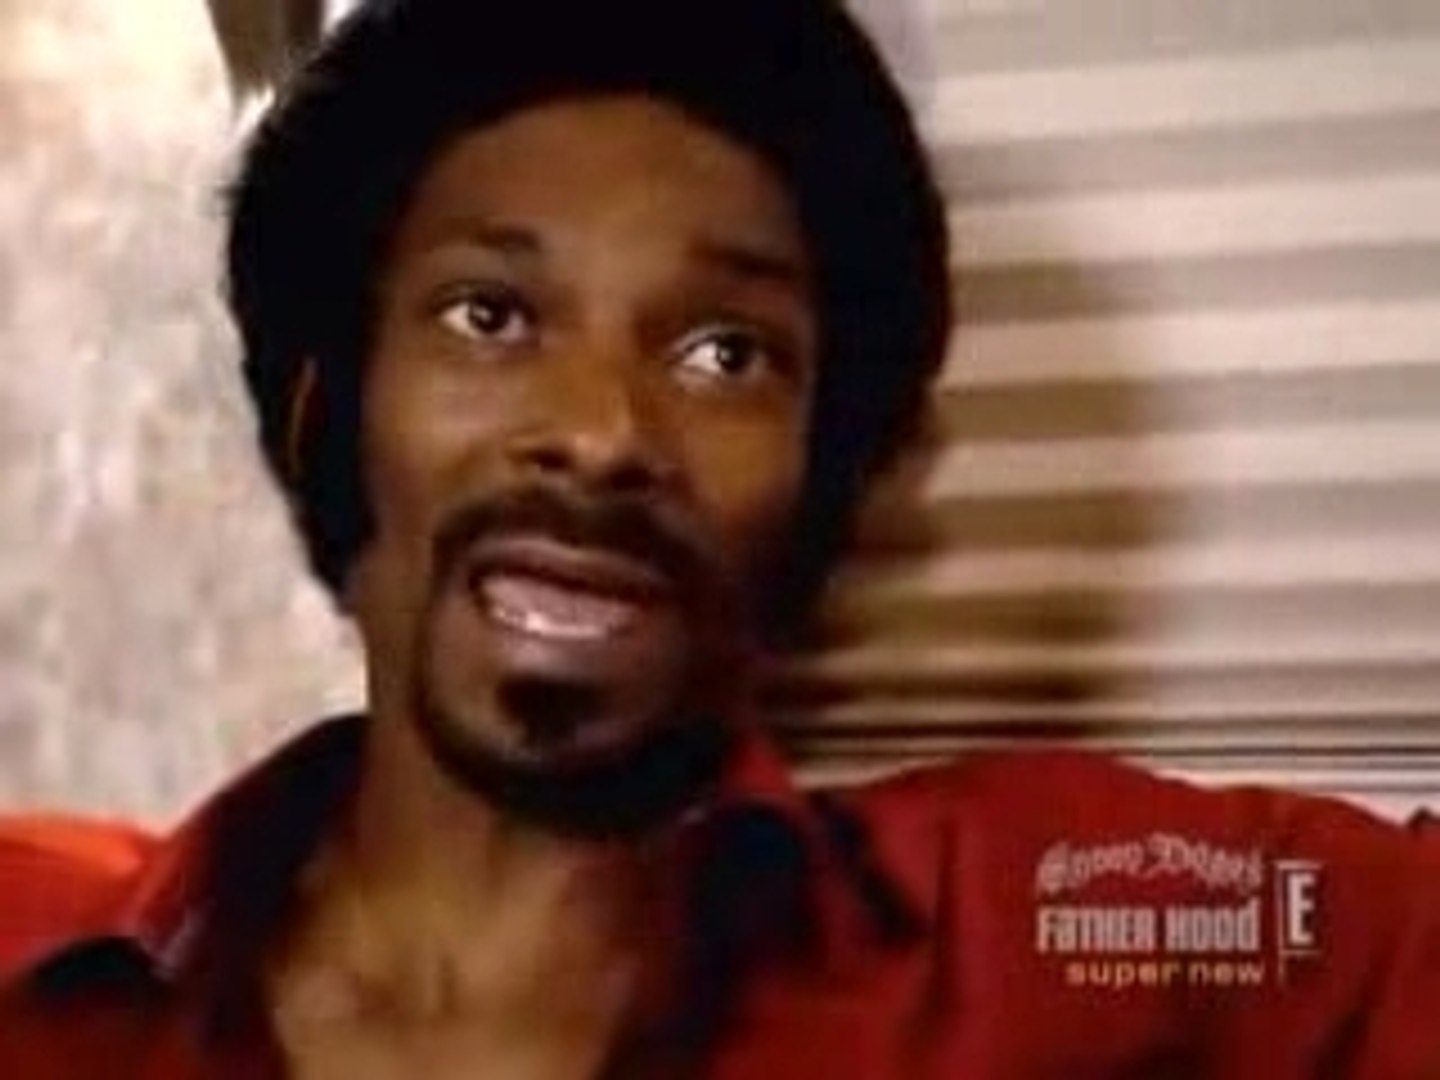 Snoop Dogg Father Hood Episode 4 Part 3 - Vidéo Dailymotion